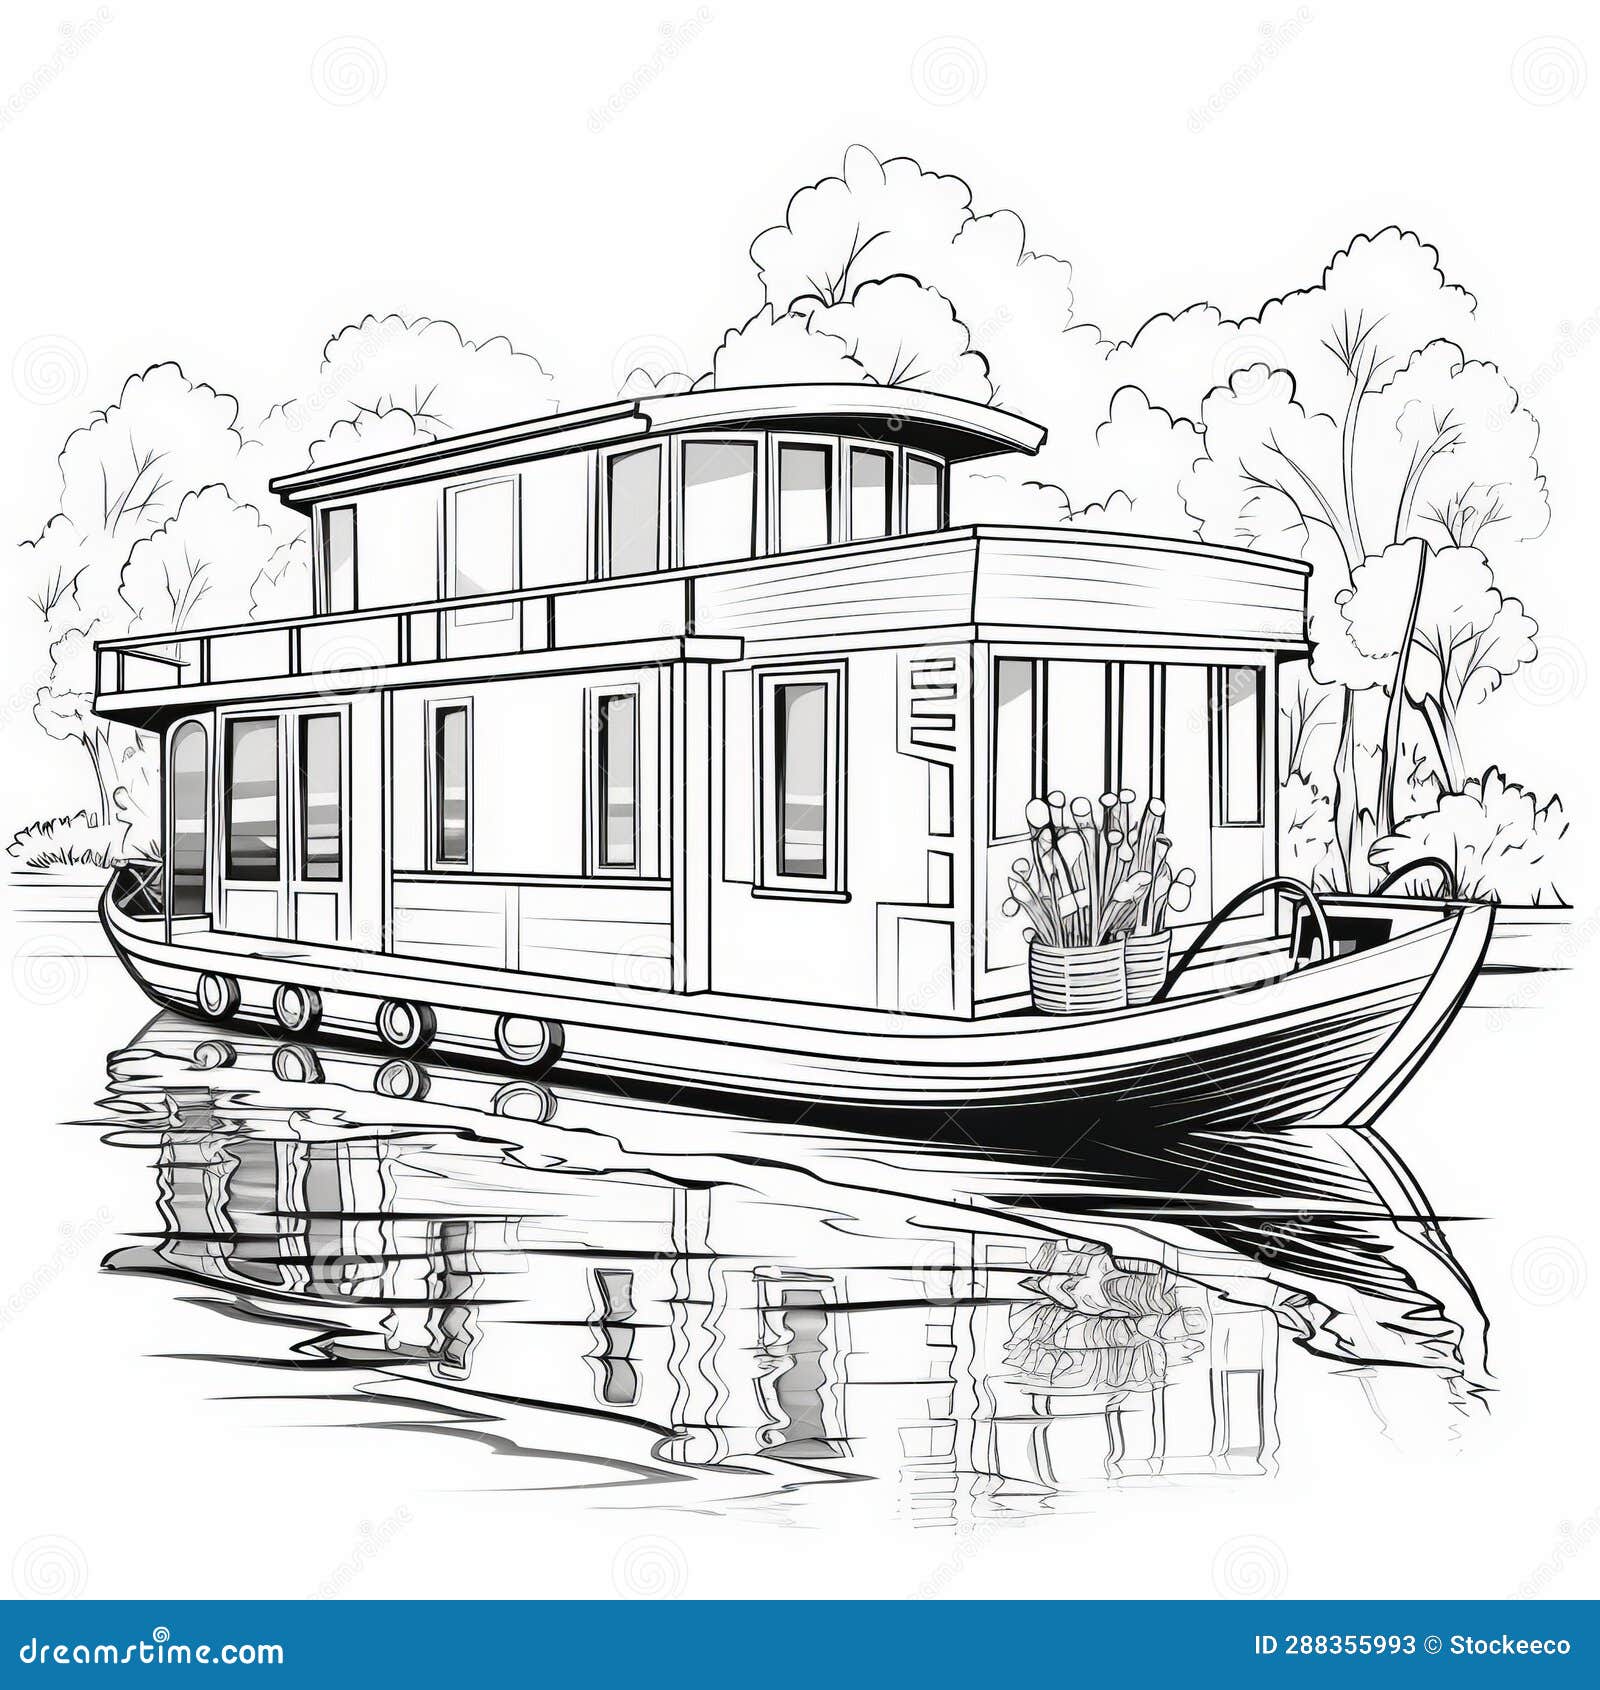 Kerala Houseboat drawing Postcard | Zazzle